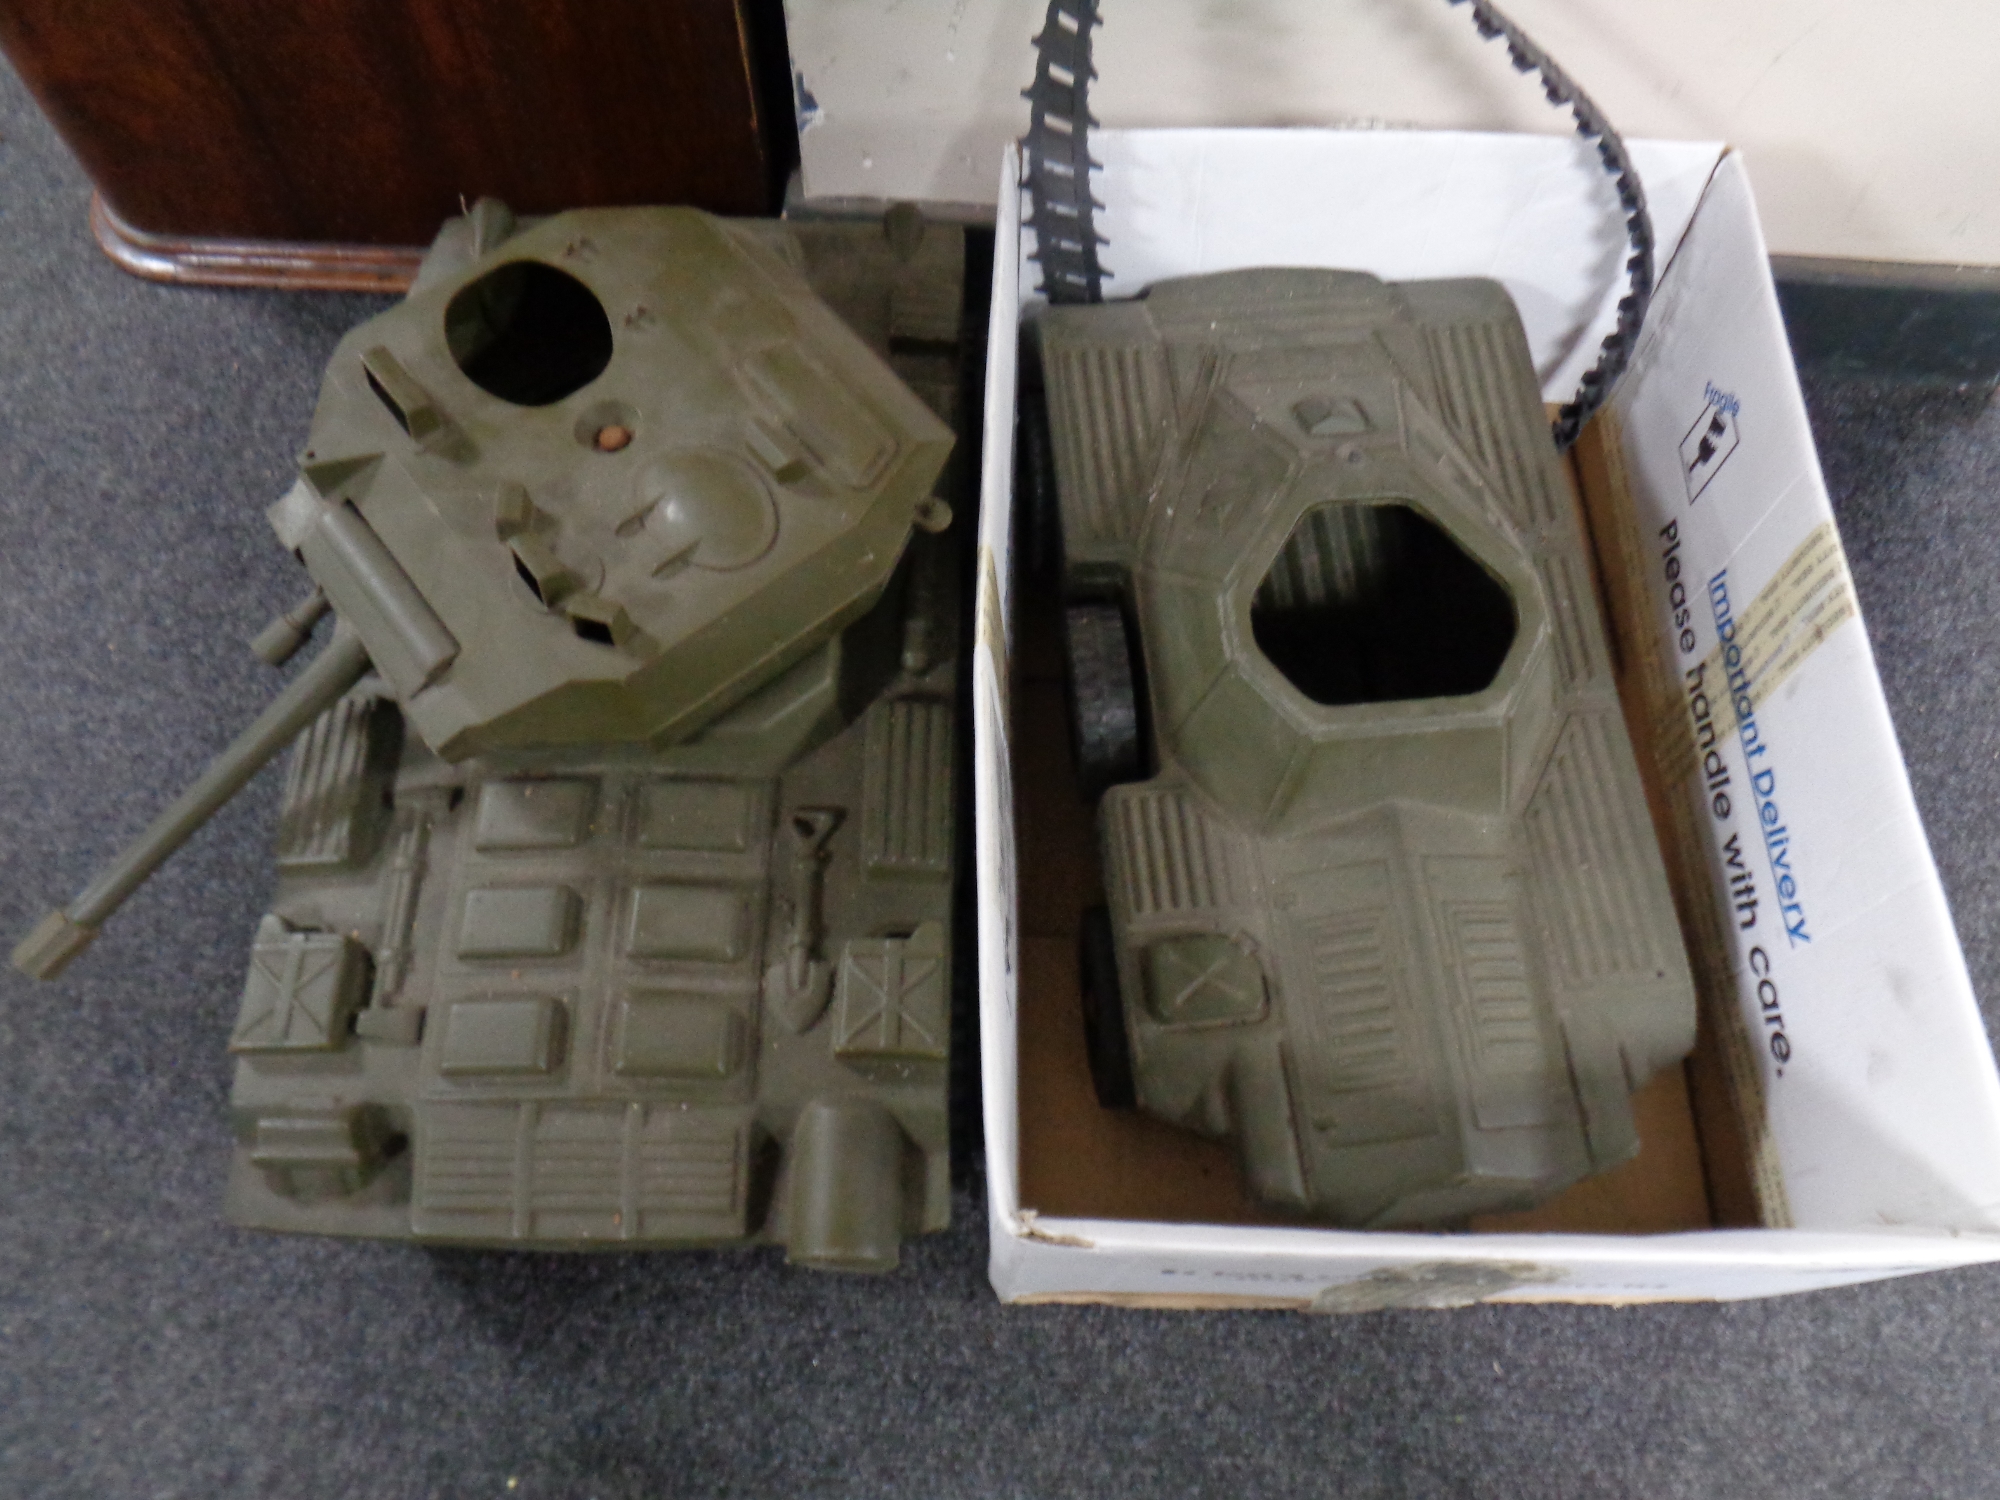 Two 20th century plastic toy tanks